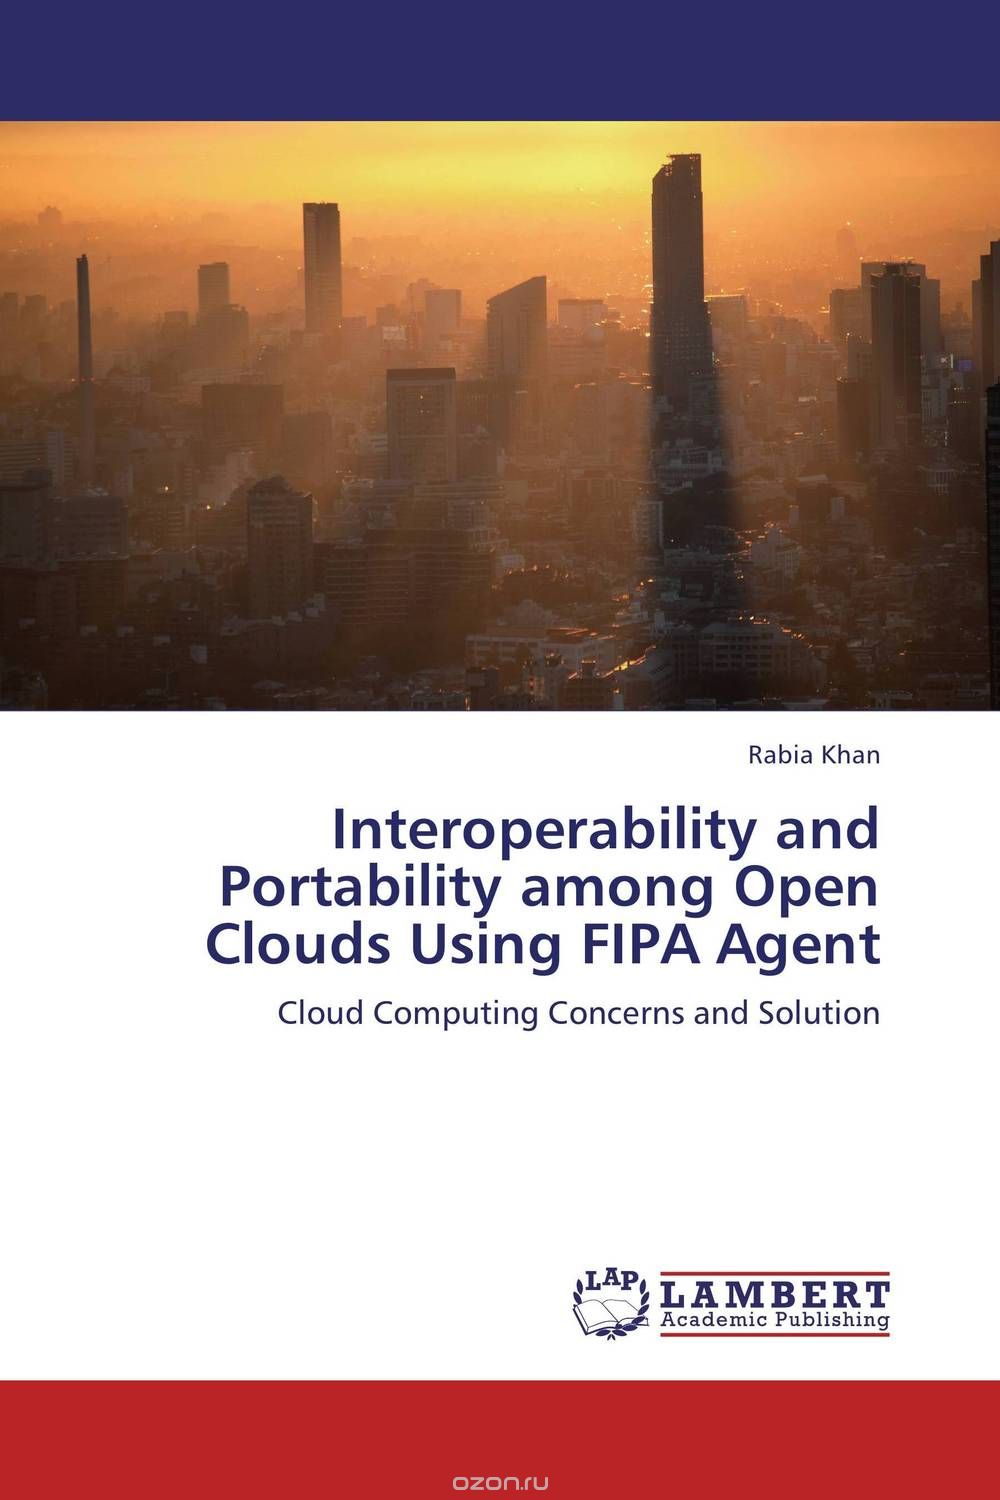 Скачать книгу "Interoperability and Portability among Open Clouds Using FIPA Agent"